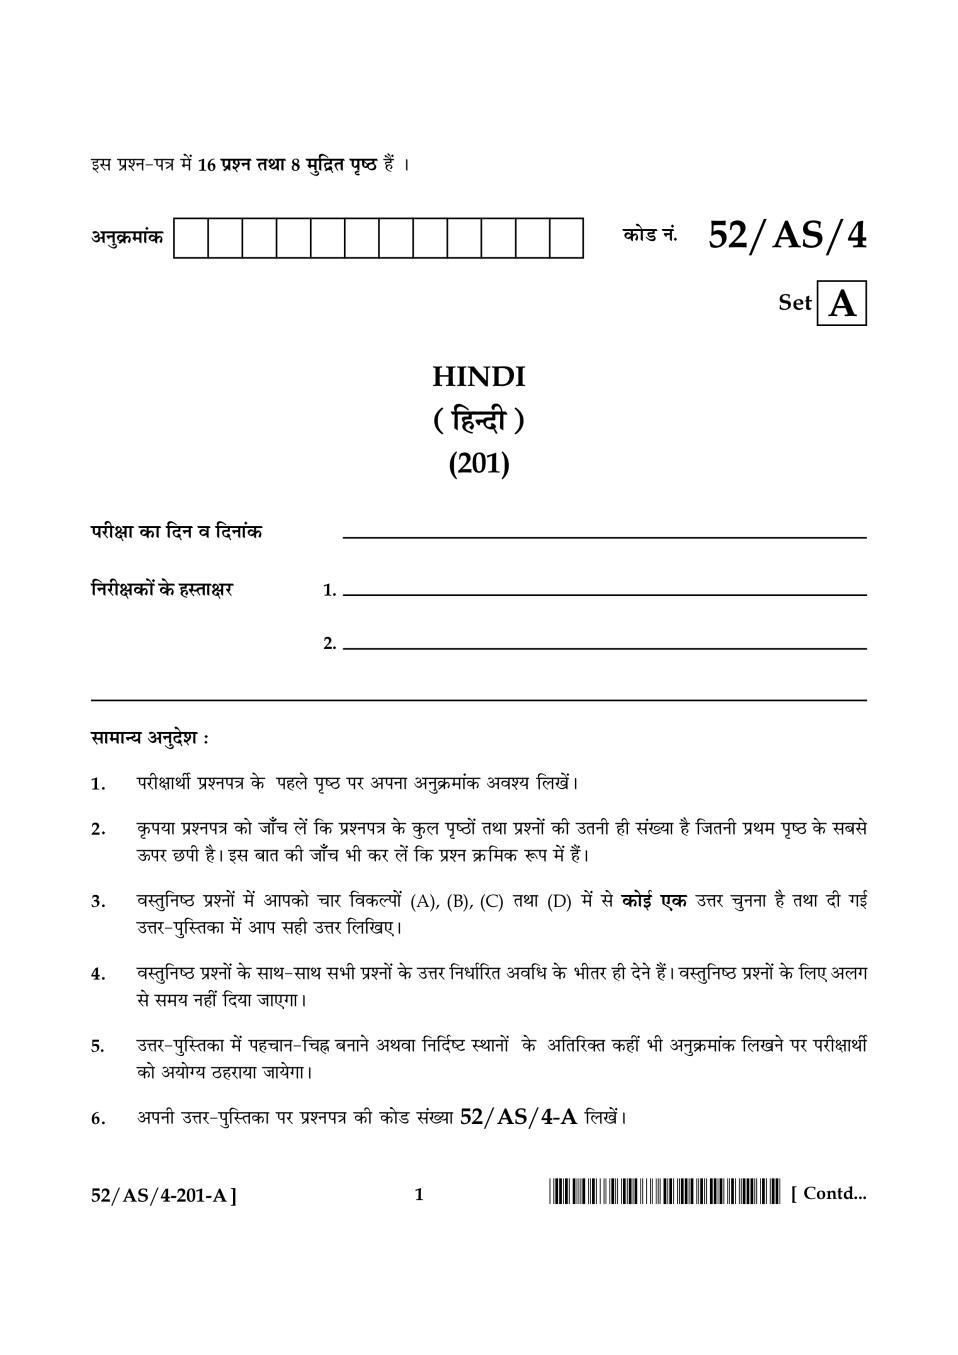 NIOS Class 10 Question Paper Apr 2016 - Hindi - Page 1